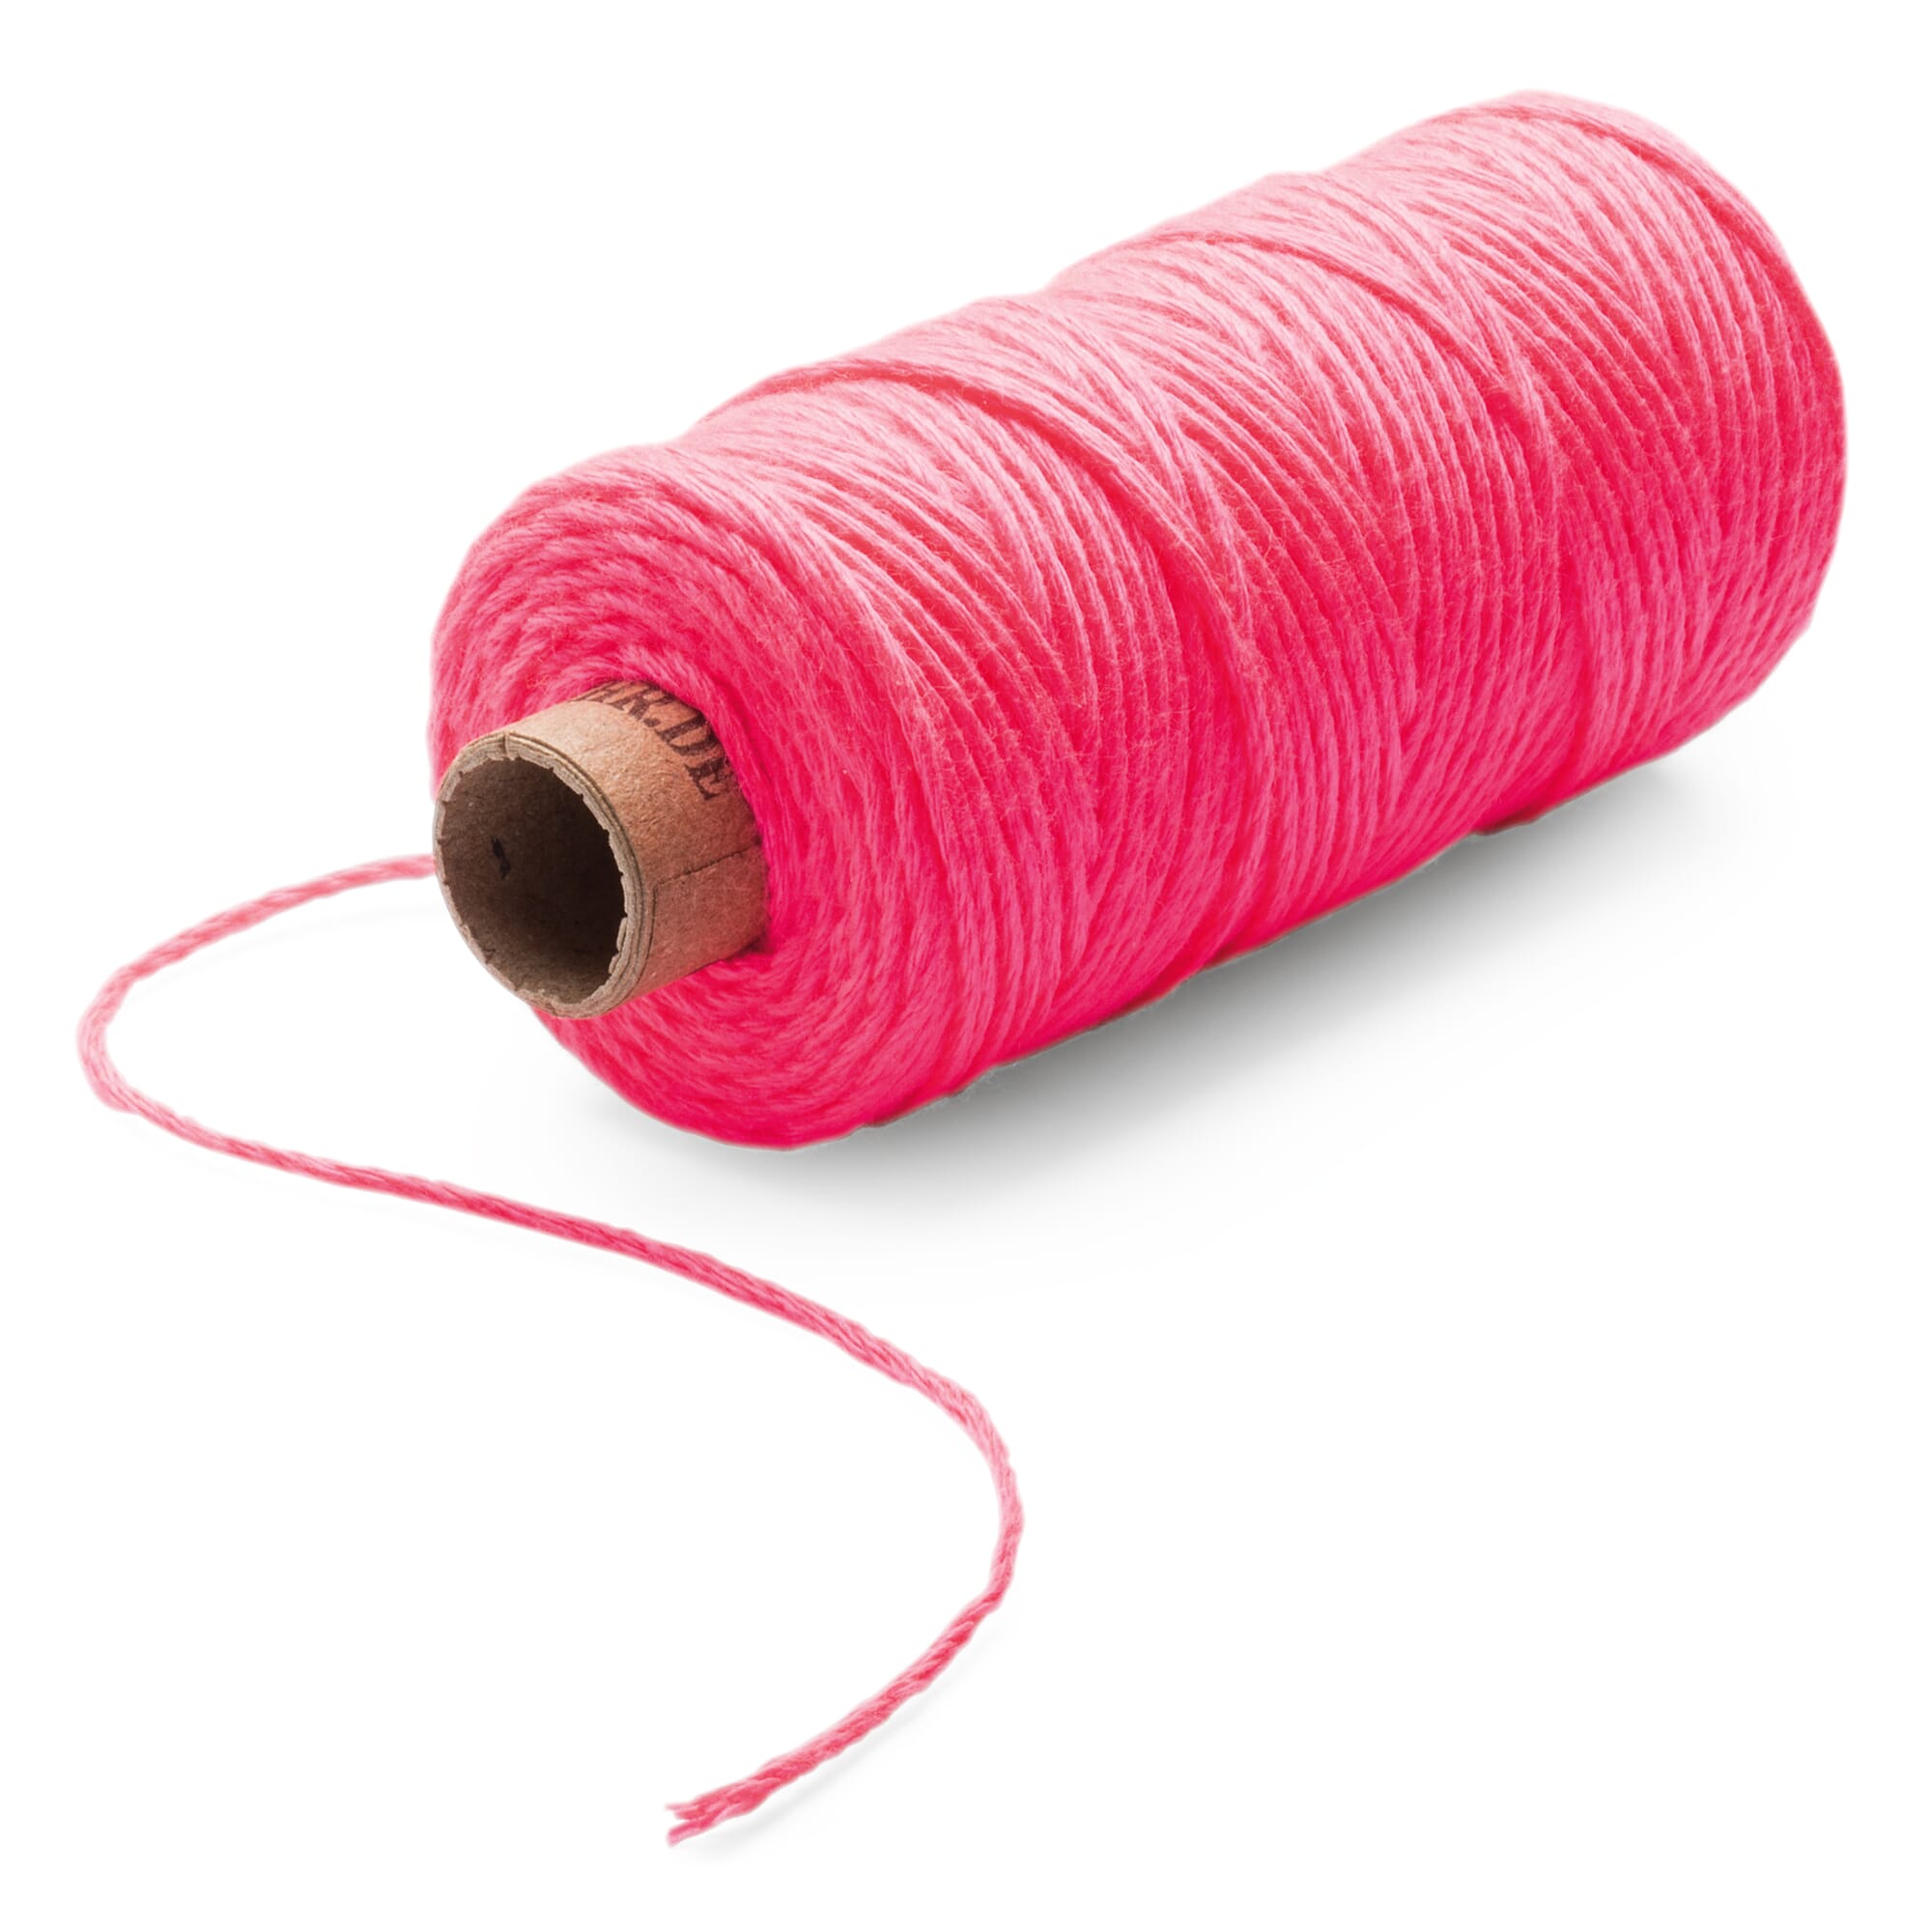 Panda Kamel vokse op Baker's Yarn, Neon pink | Manufactum